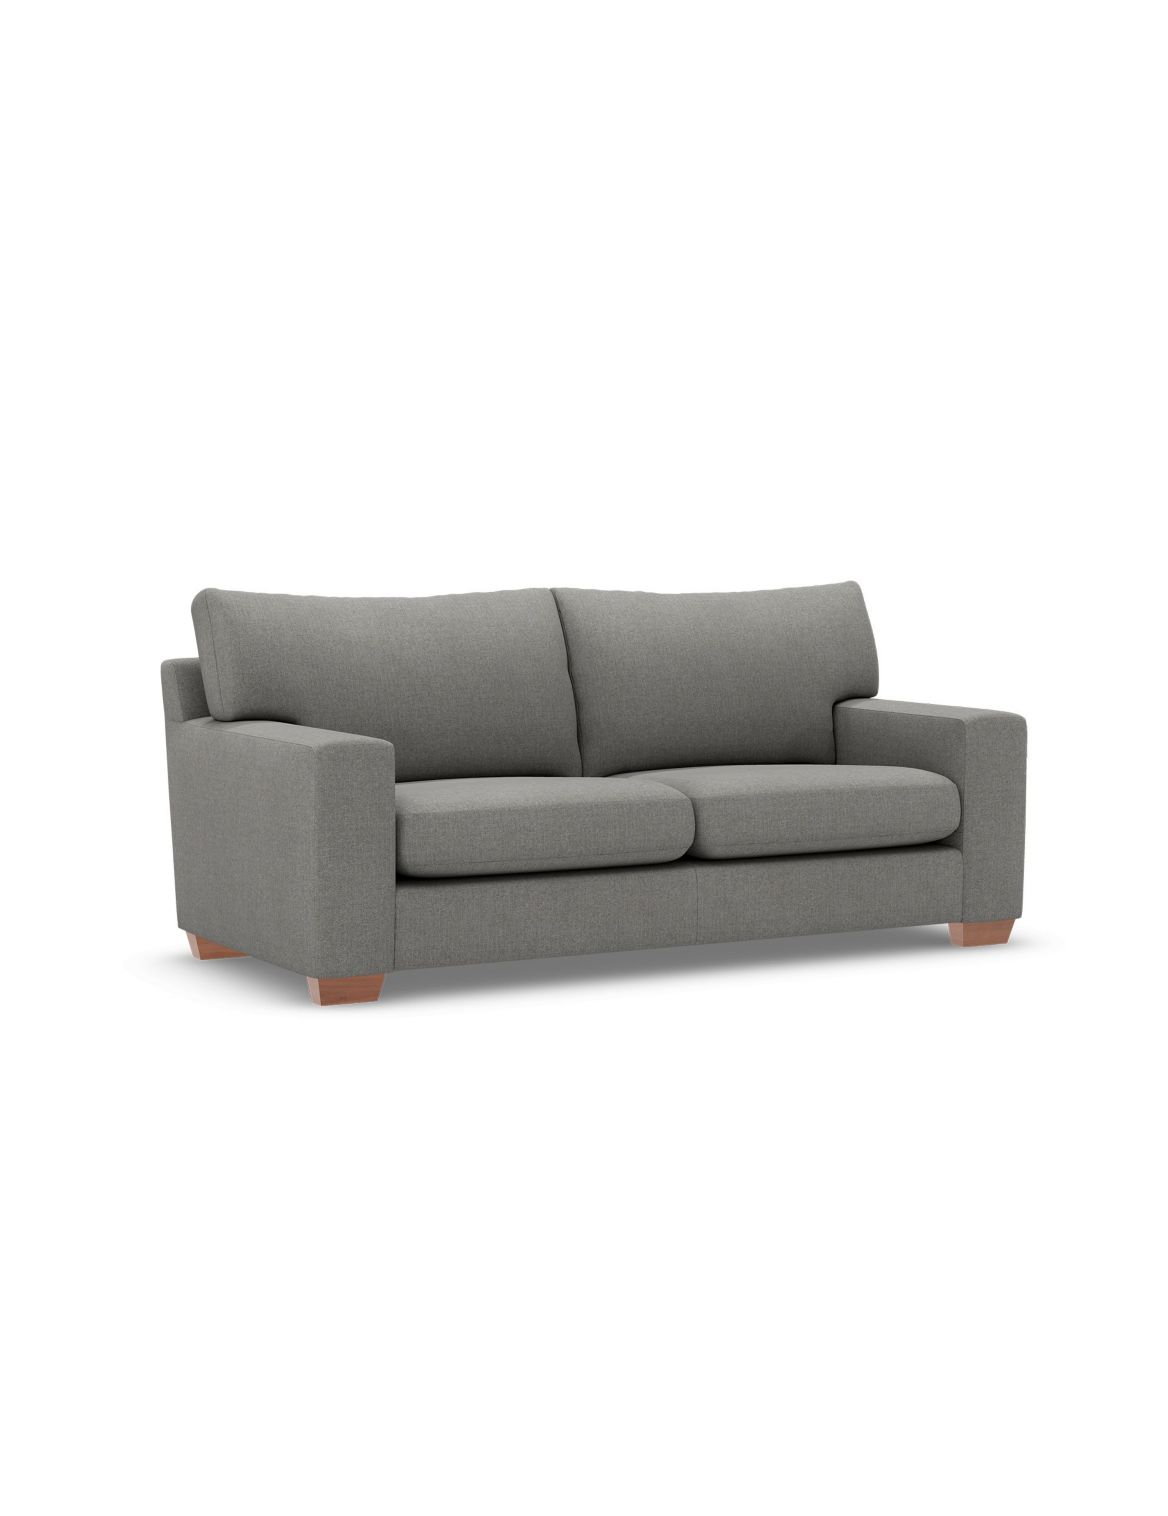 Alfie Medium Sofa grey